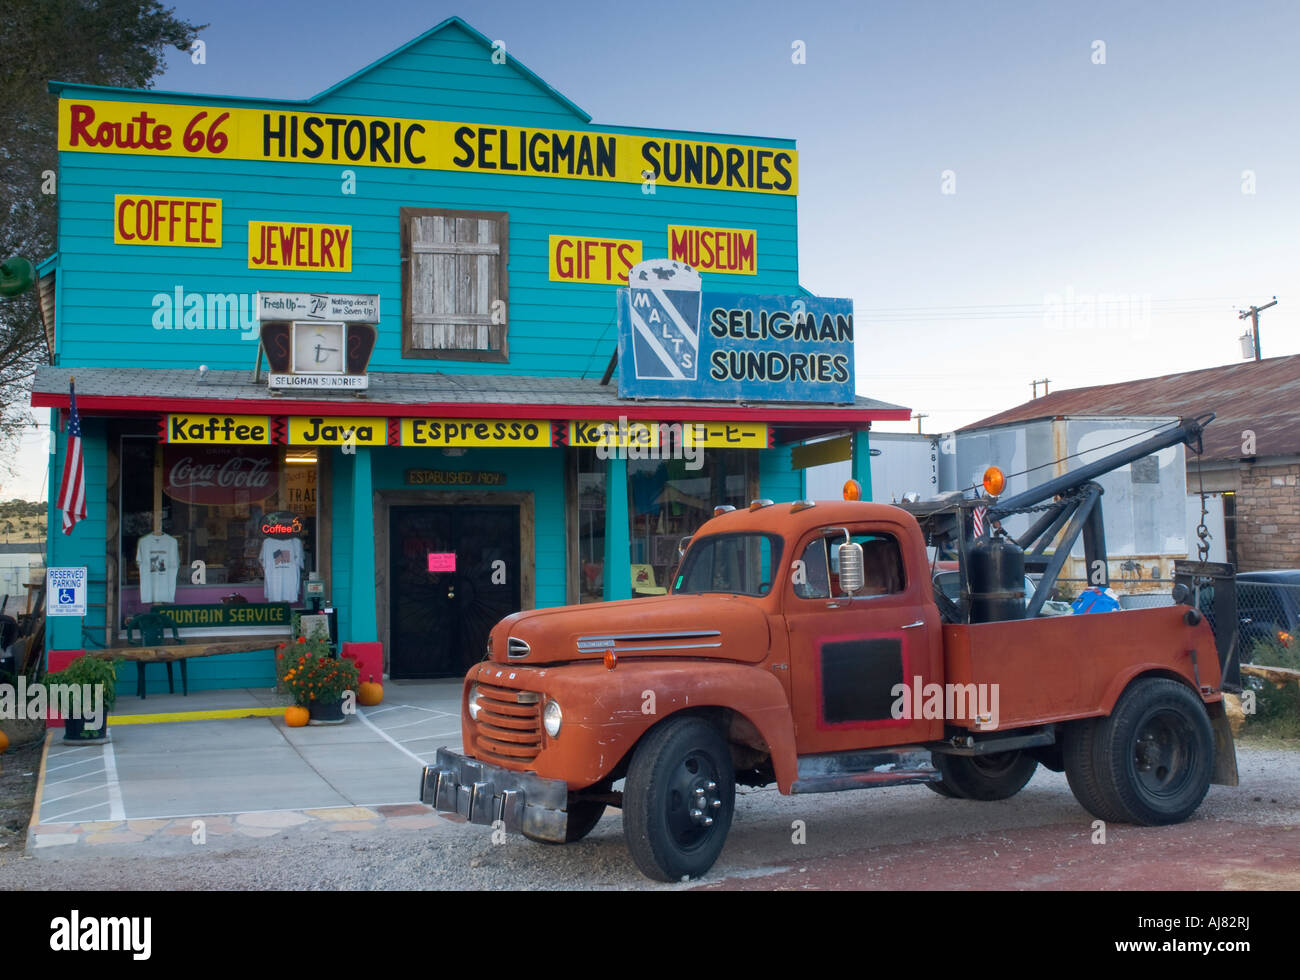 Seligman Sundries gift shop at Route 66 in Seligman Arizona USA Stock Photo